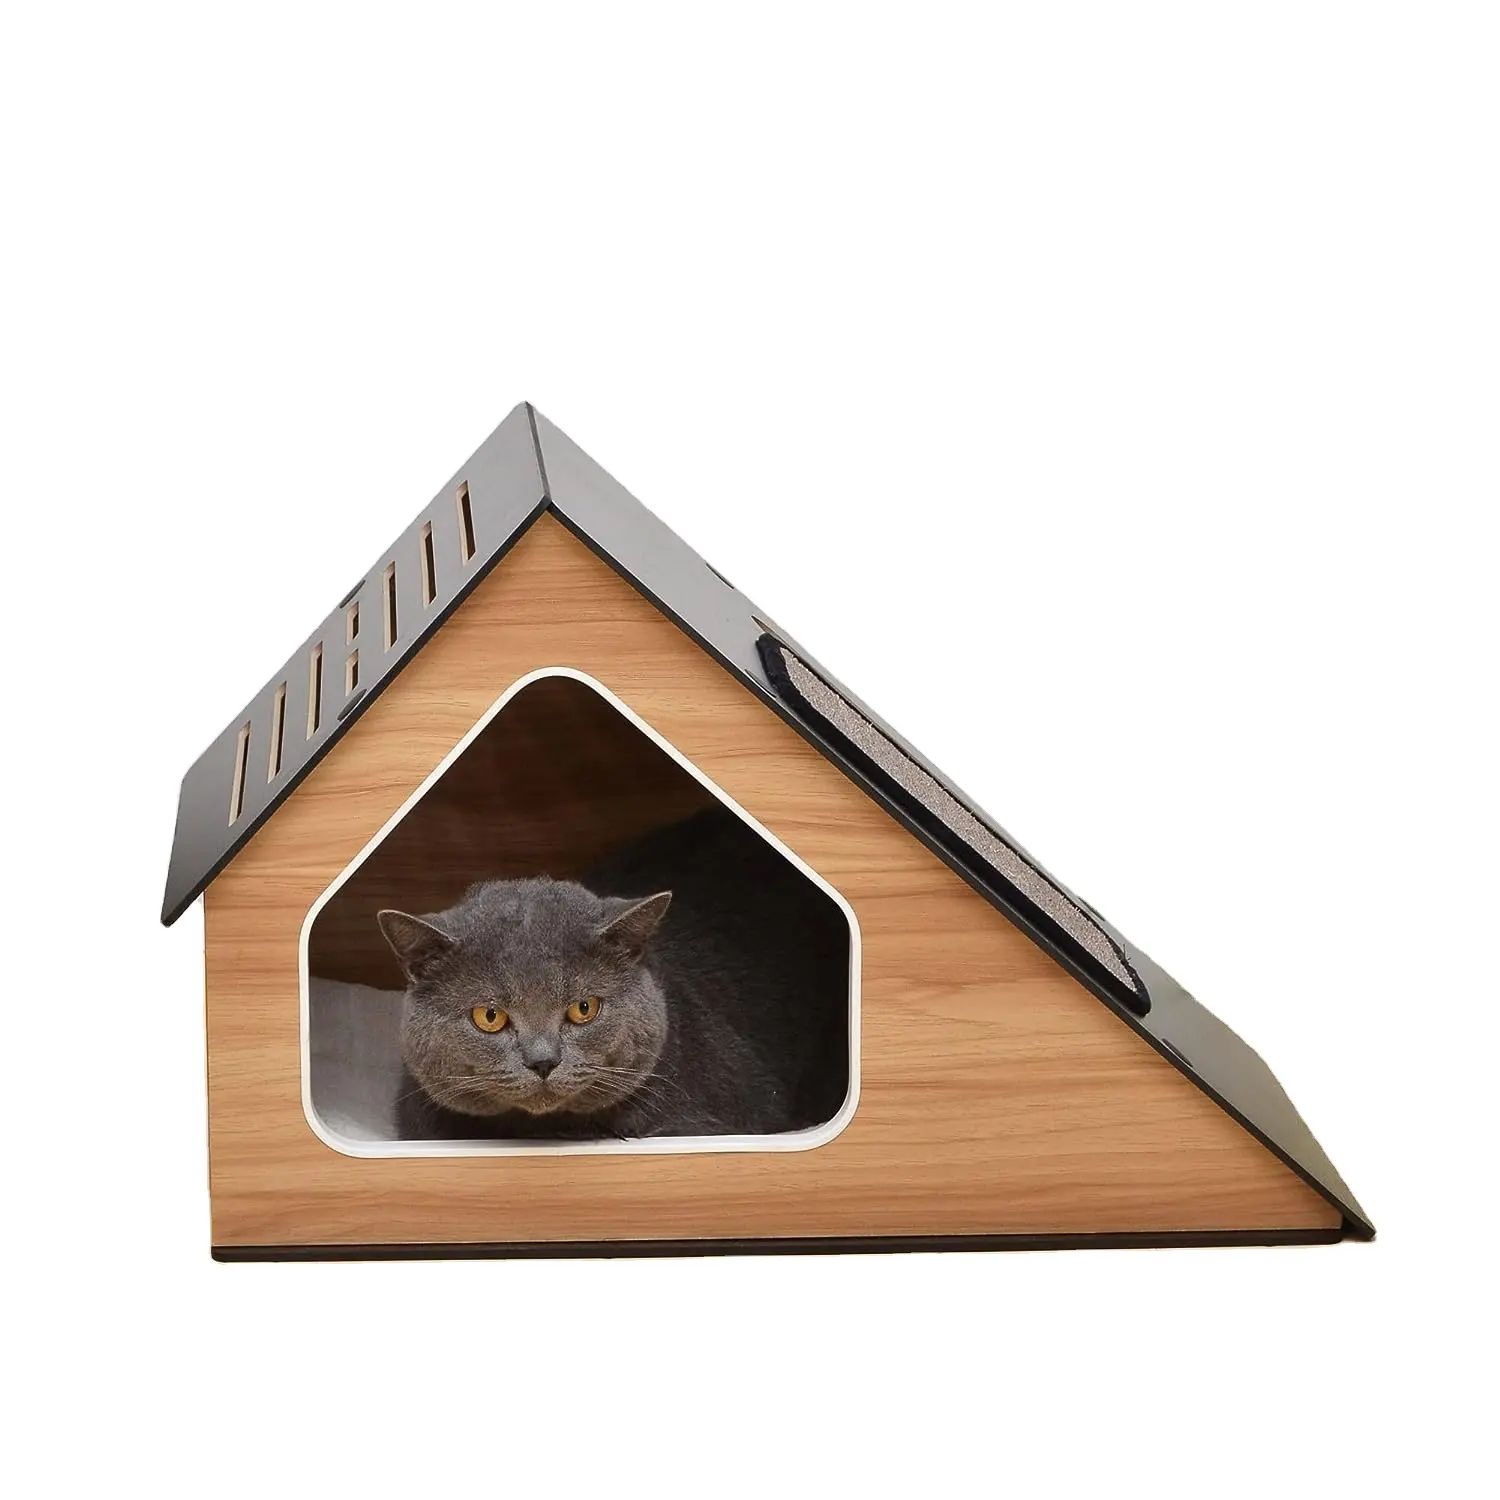 Desain produsen rumah hewan peliharaan kayu dalam ruangan tempat tidur bantalan katun hewan peliharaan kayu aman rumah kucing anjing